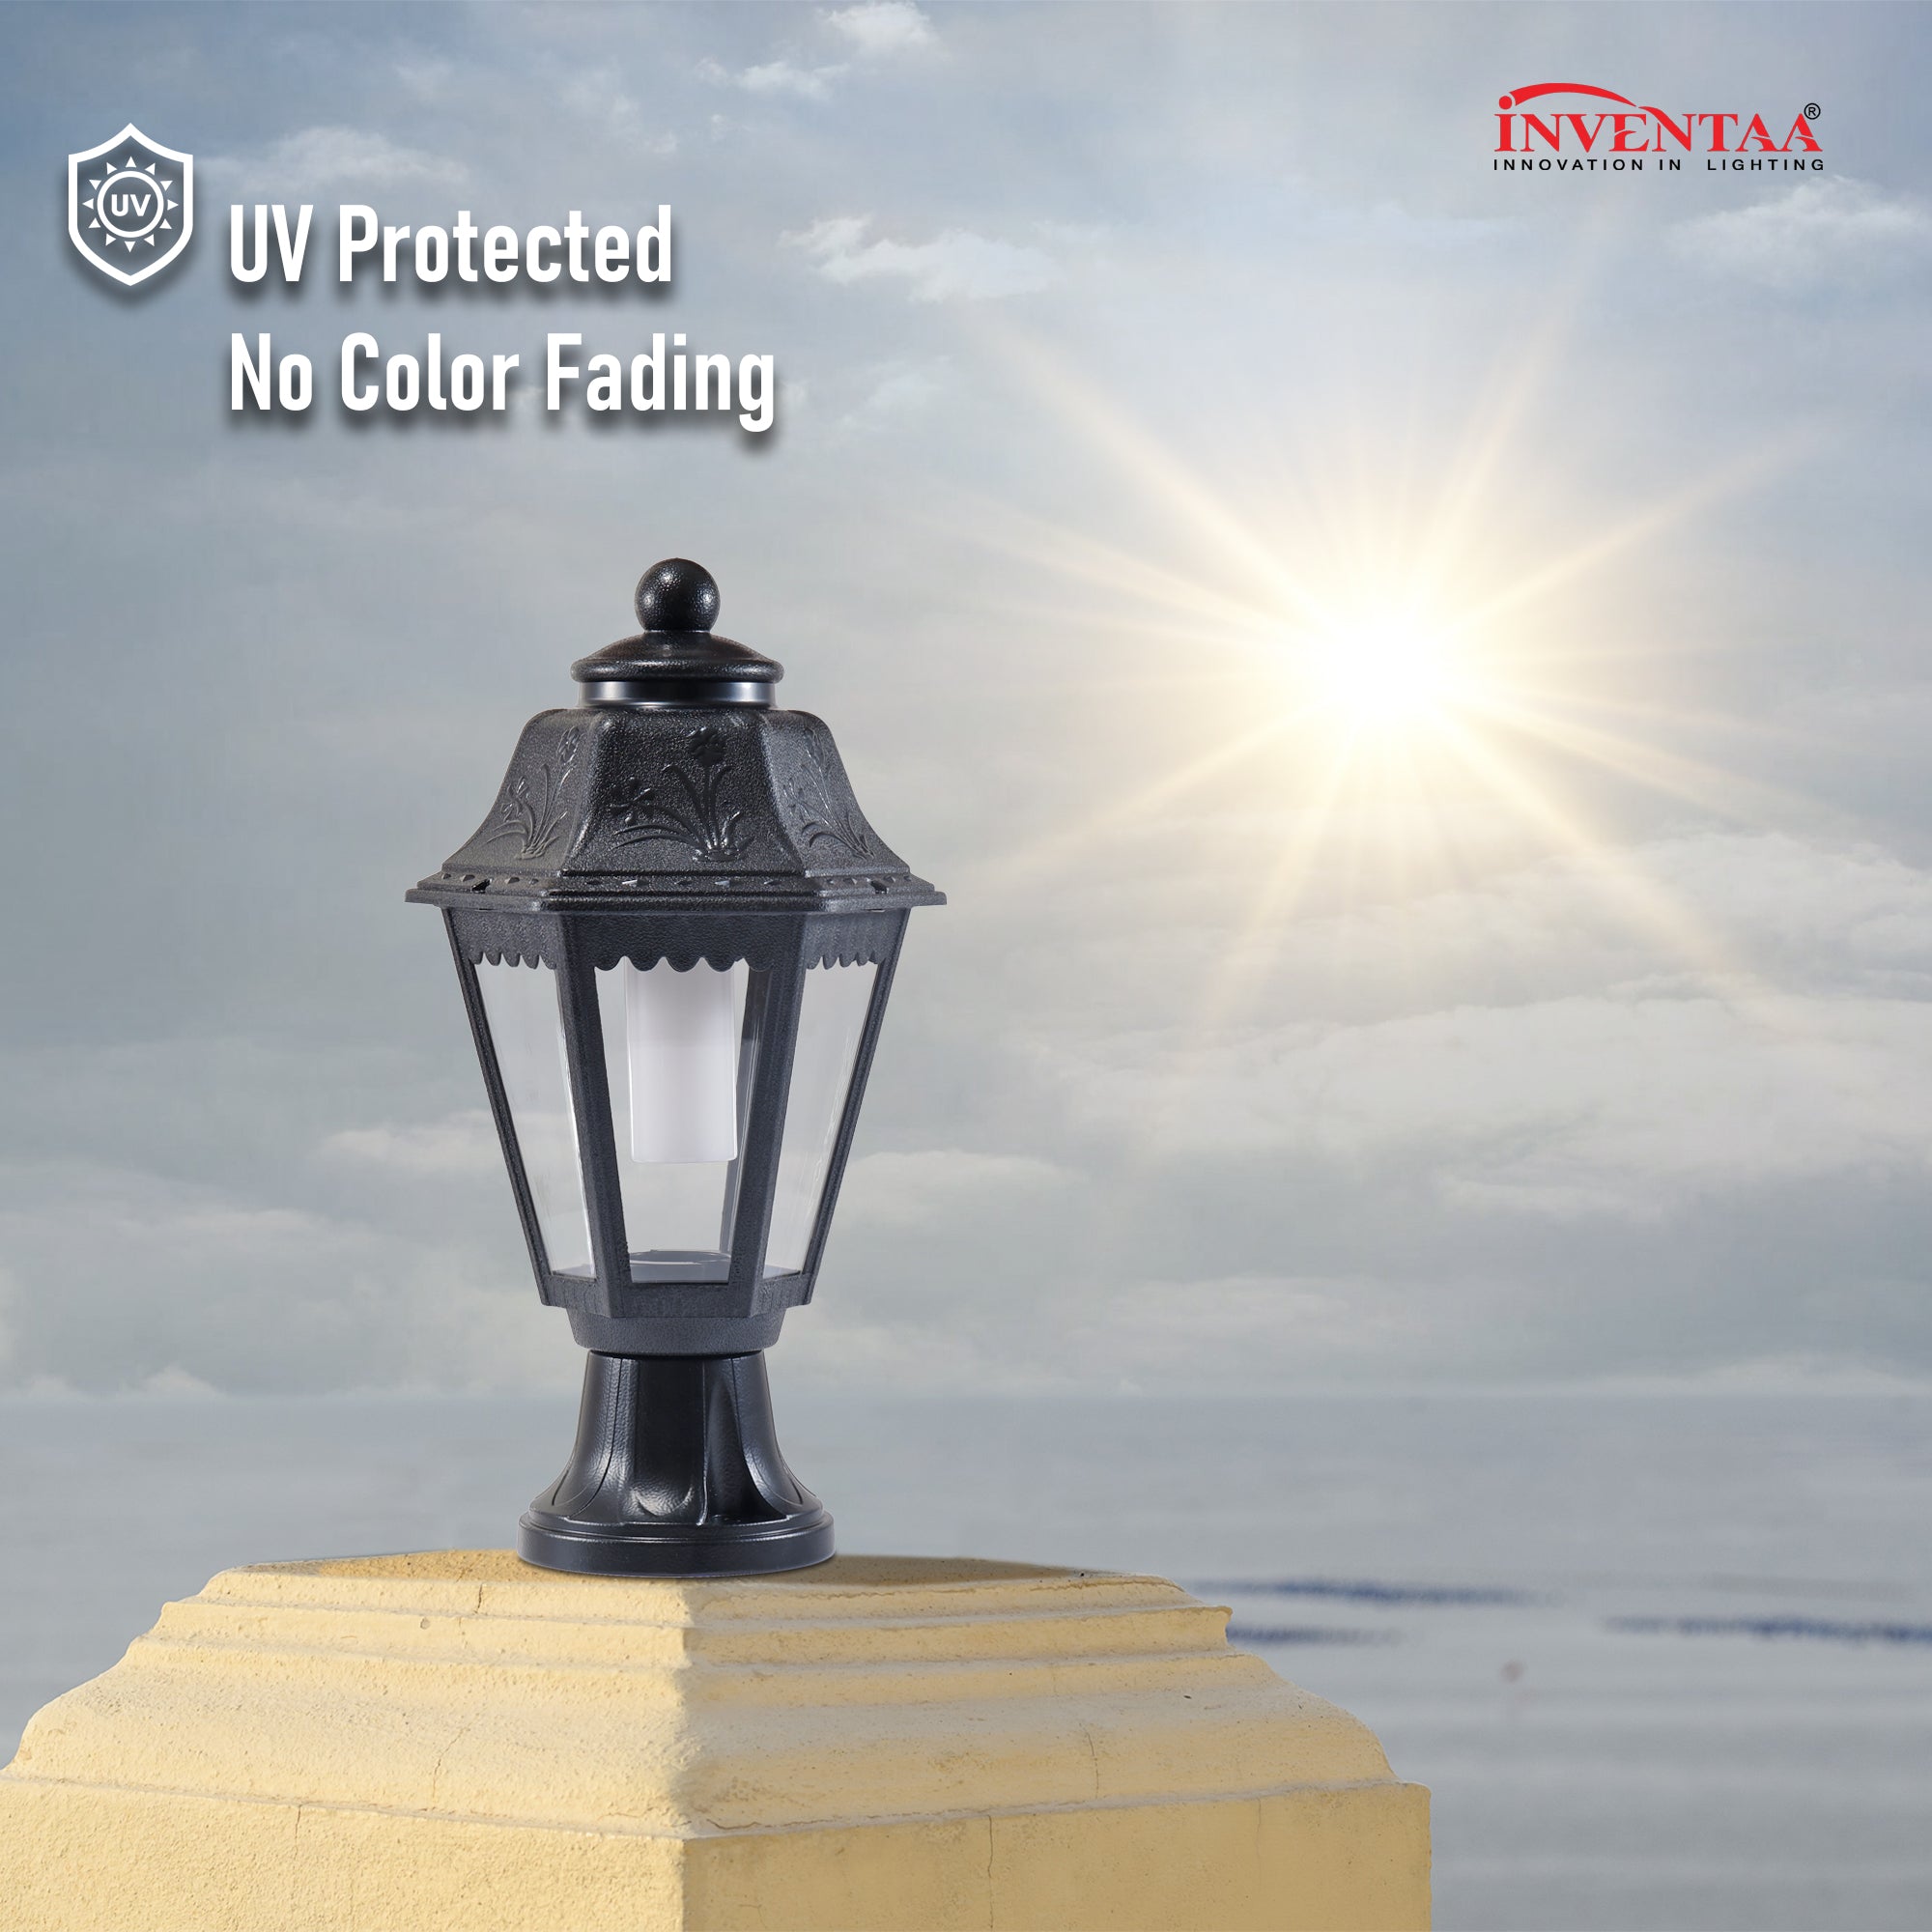 UV Protected Tacita LED Gate Light | Best LED Gate Light Model Online at affordable price Online #bulb options_cool